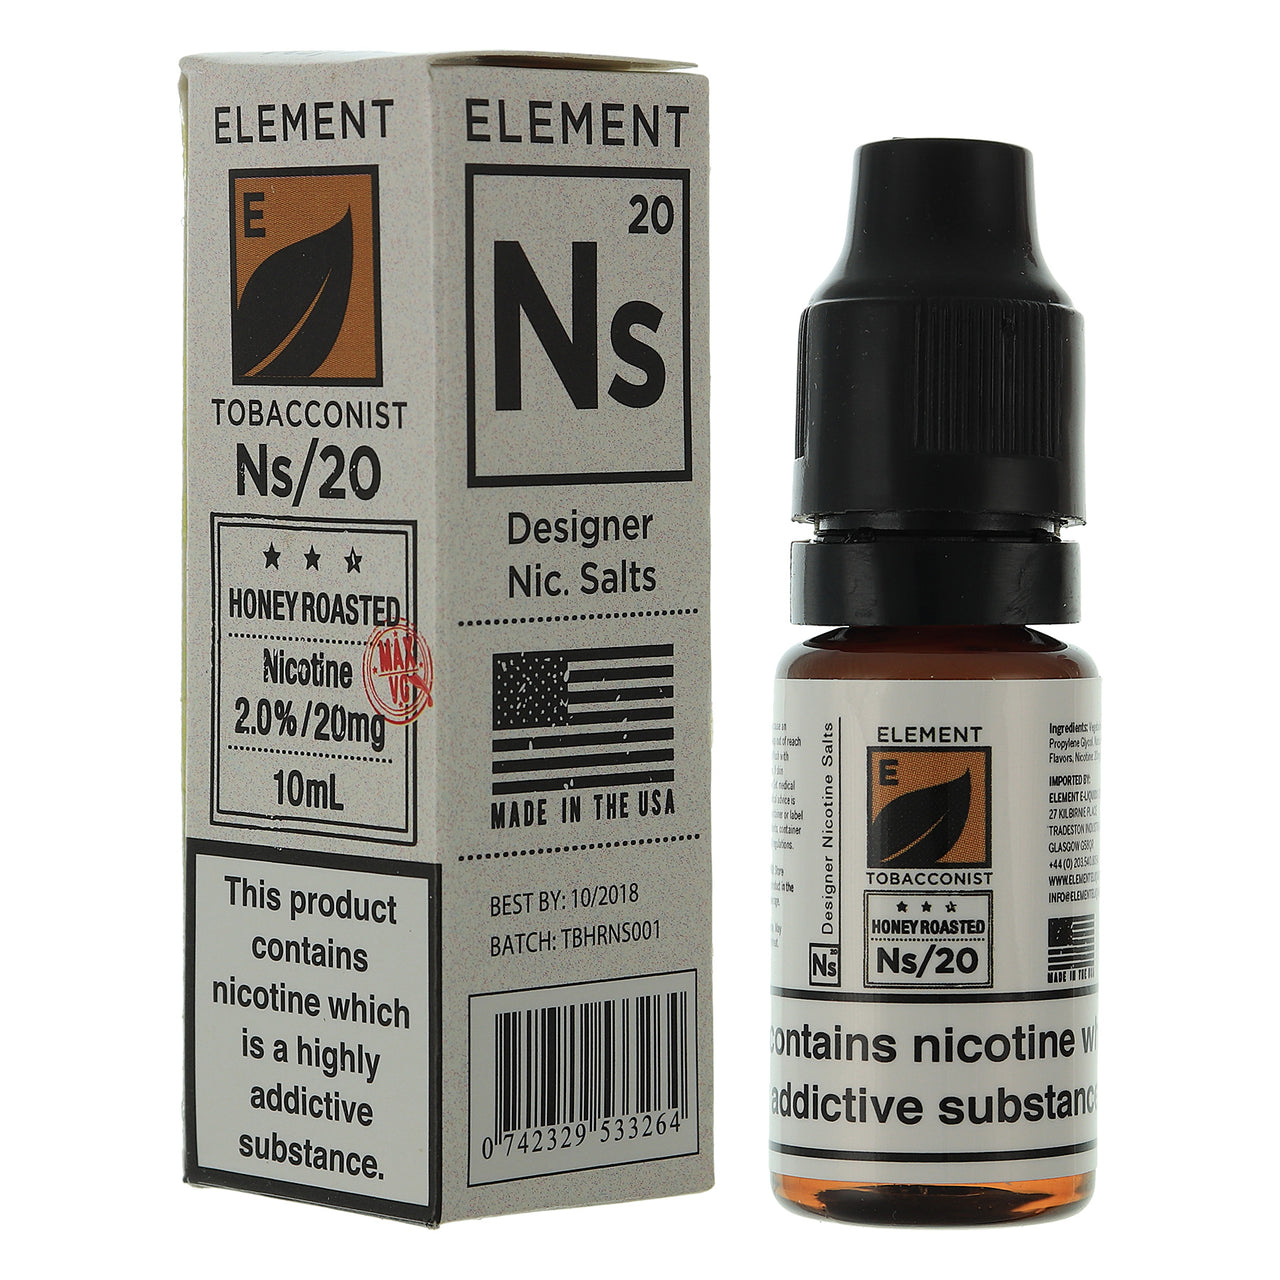 NS20 Honey Roasted Tobacco Designer Nic Salts By Element